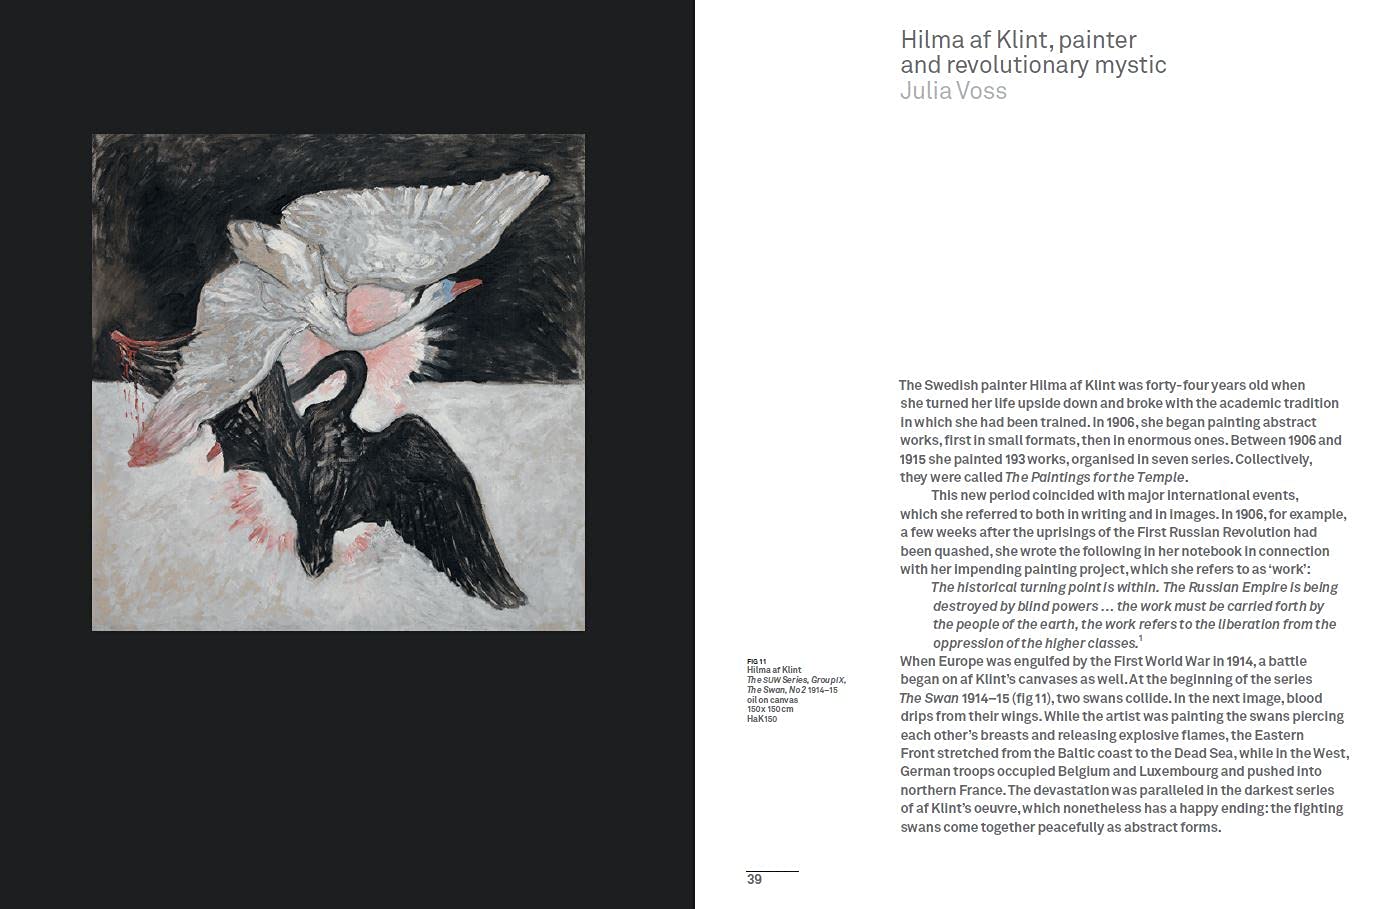 Hilma af Klint: The Secret Paintings